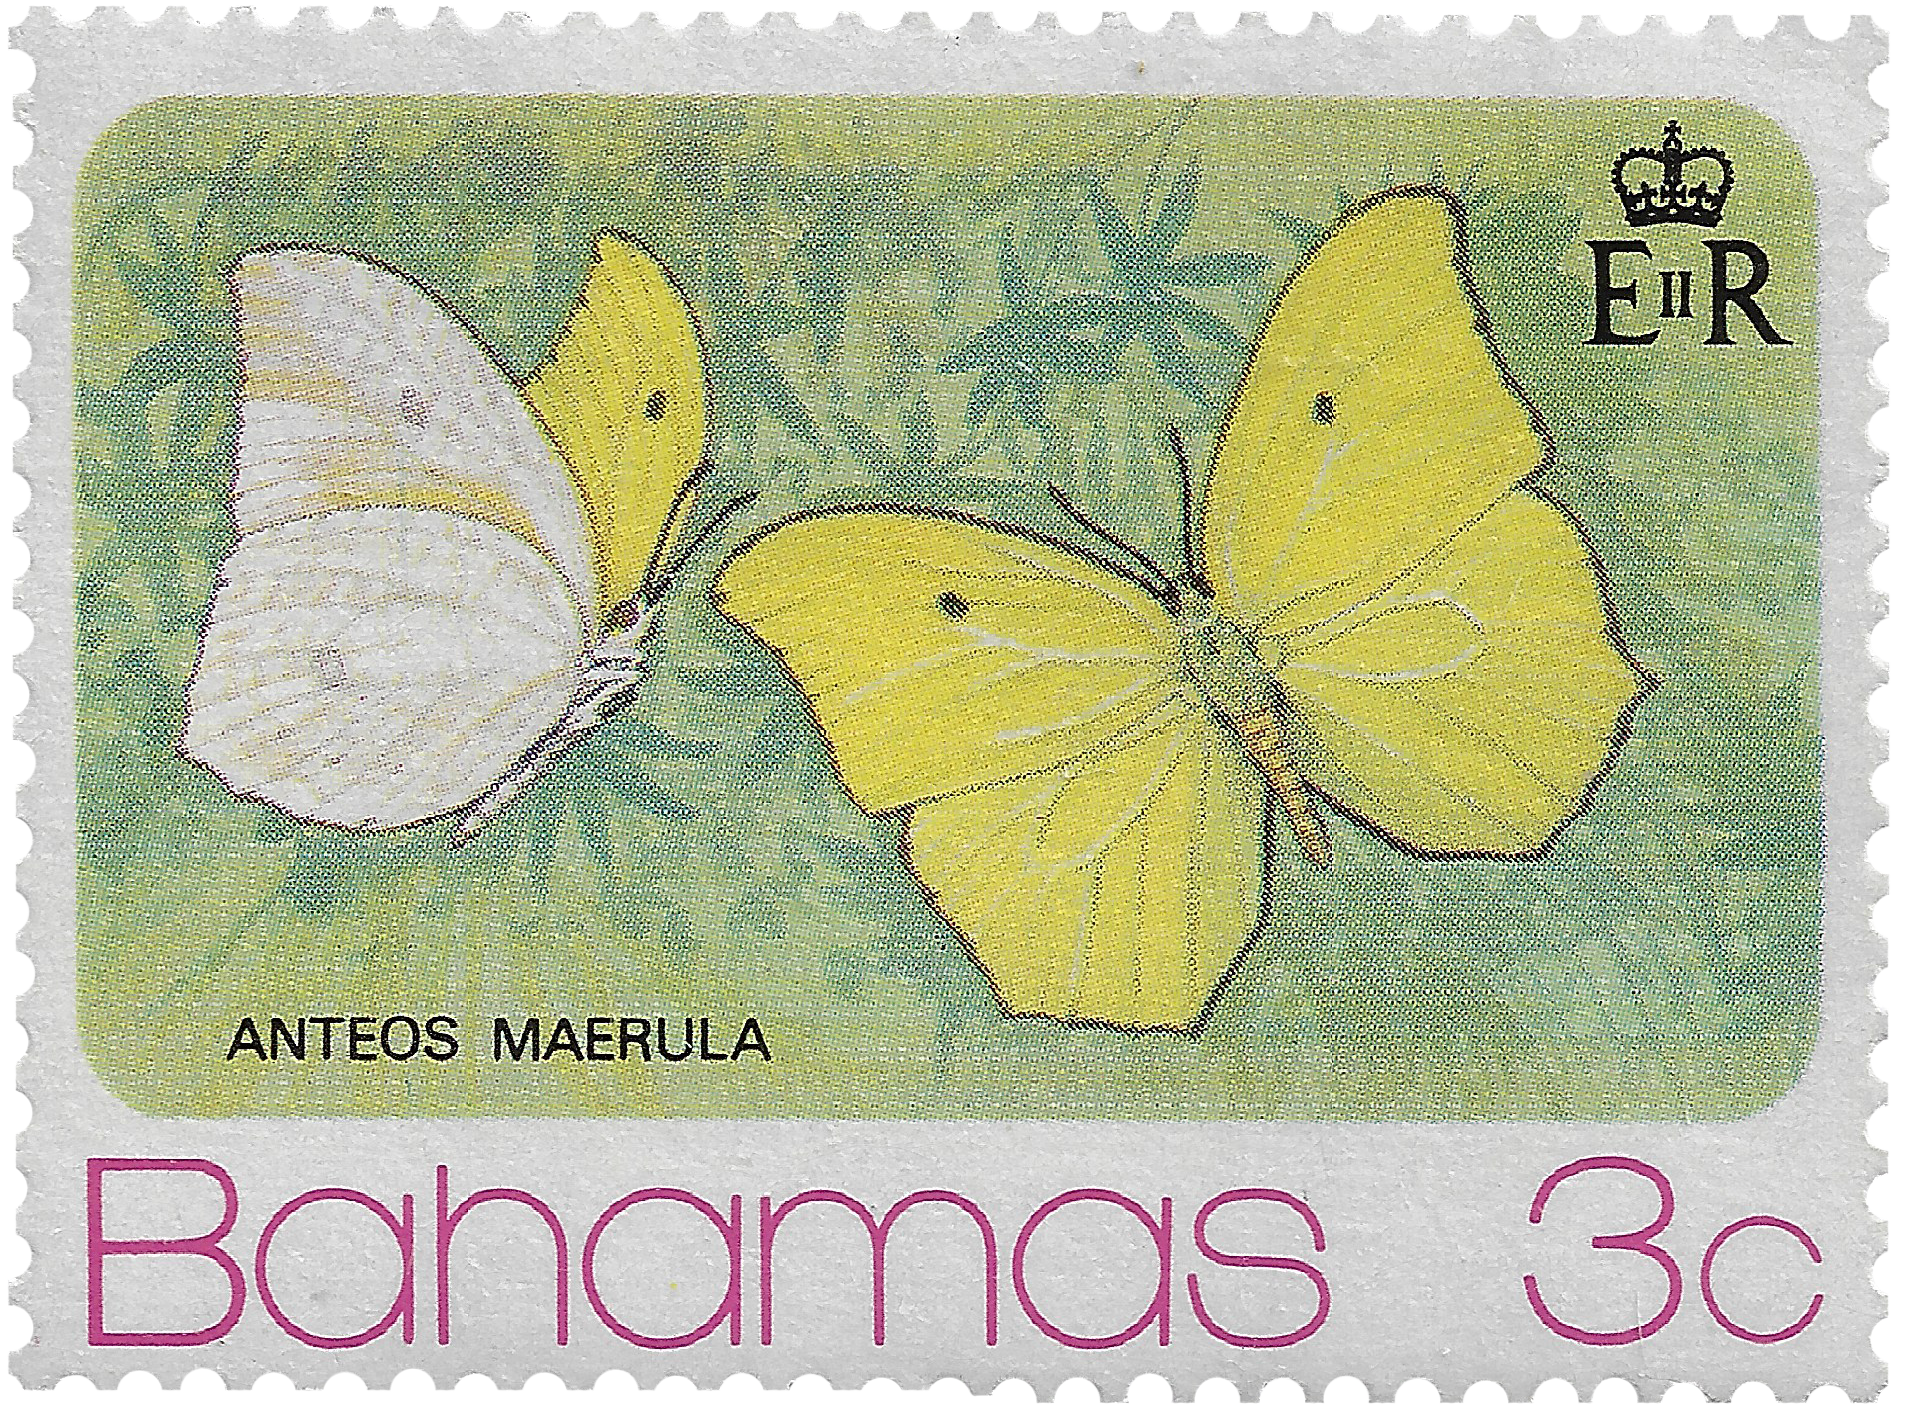 3c 1975, Anteos Maerula, Butterfly